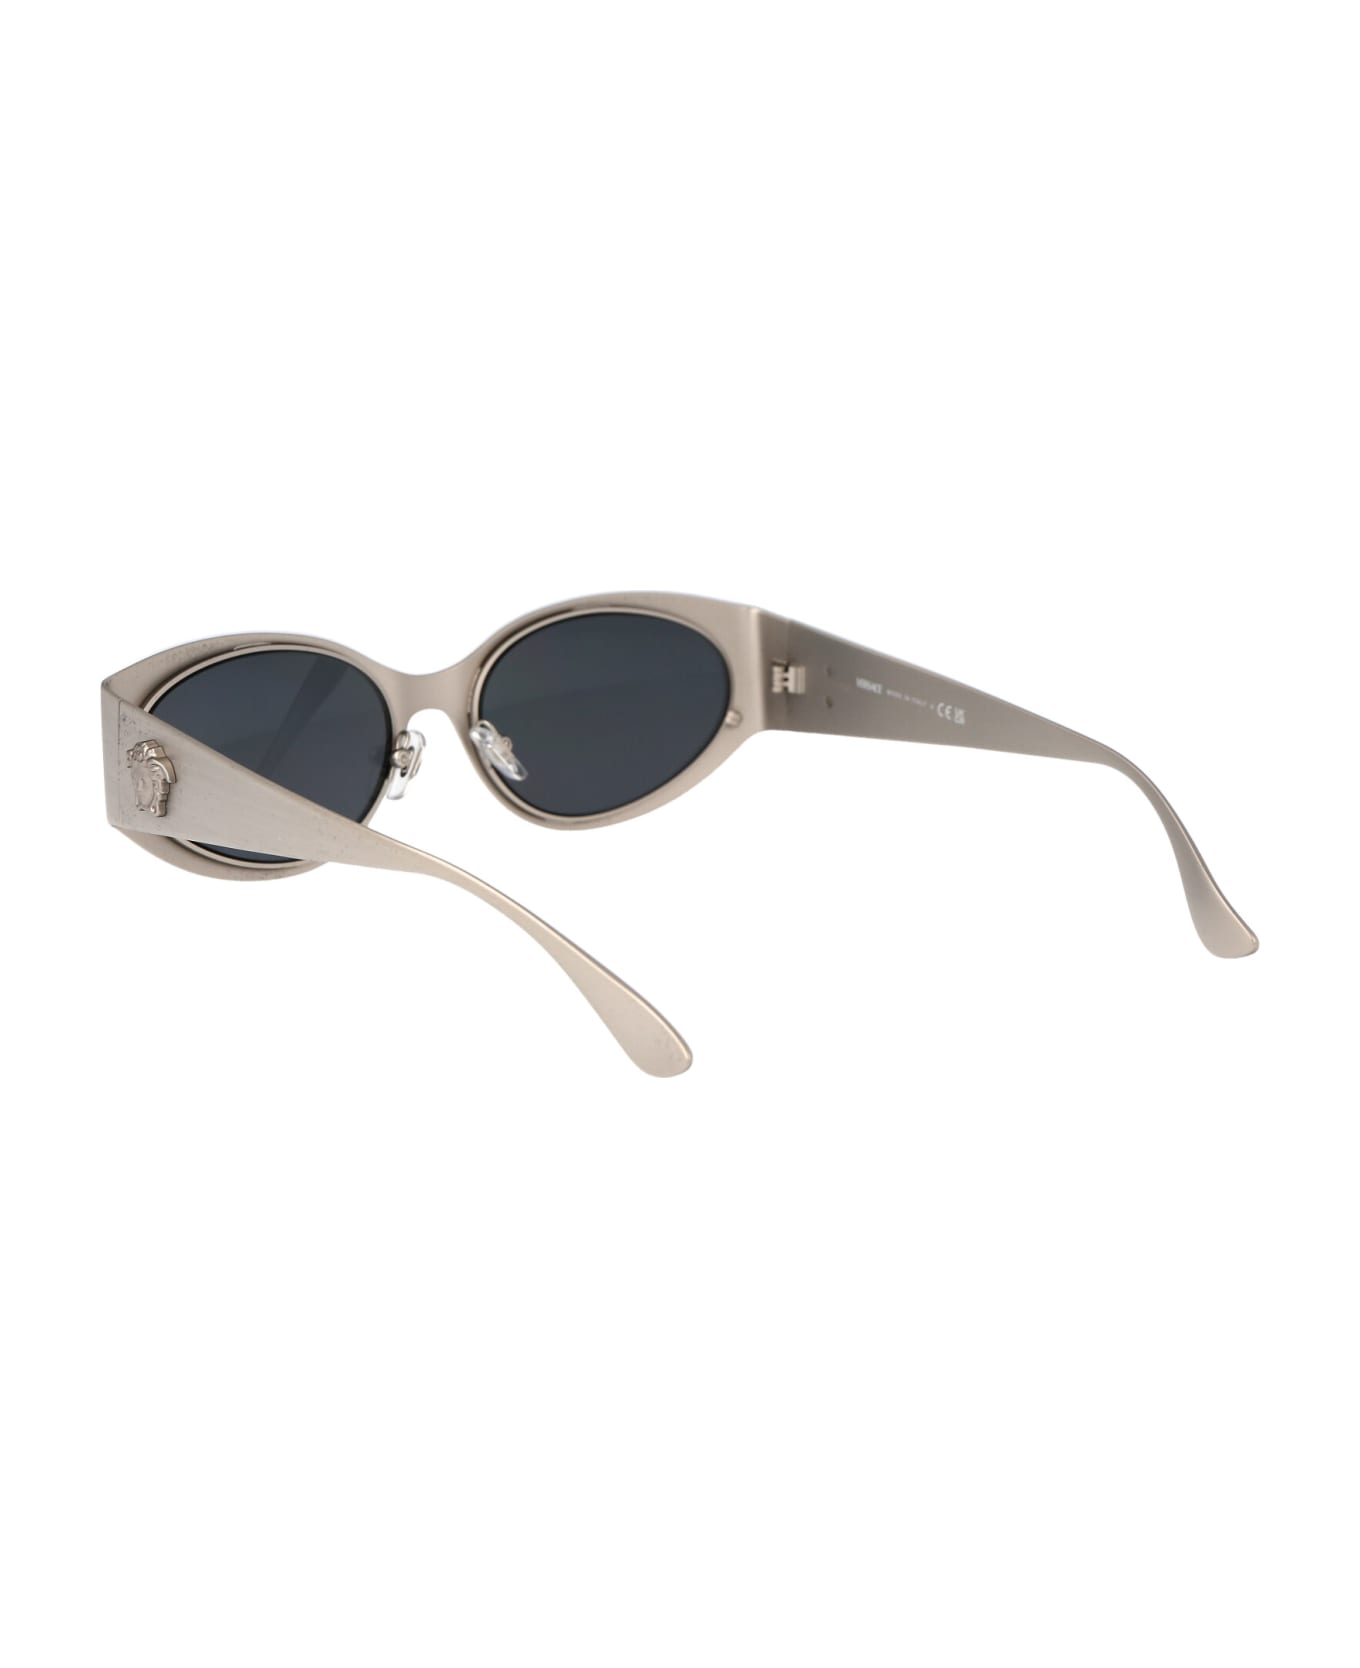 Versace Eyewear 0ve2263 Sunglasses - 12666G Matte Silver